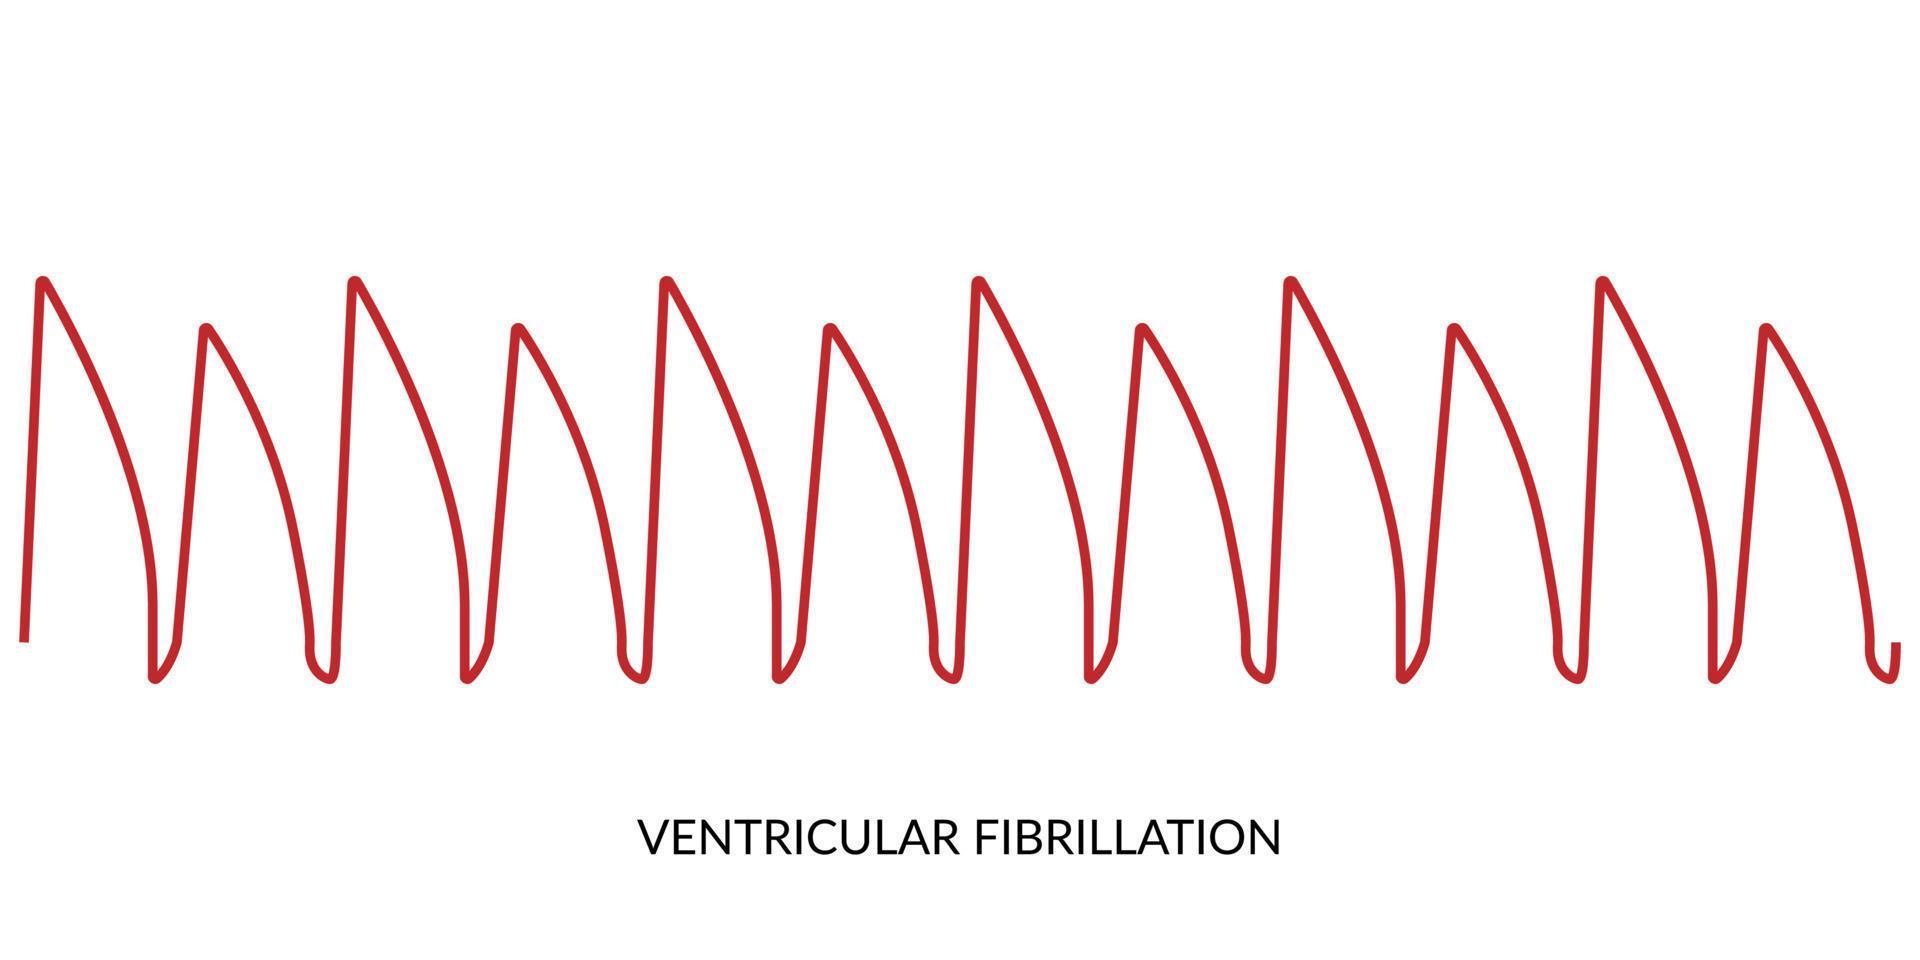 ECG Heartbeat Line. Electrocardiogram vector illustration. Ventricular Fibrillation